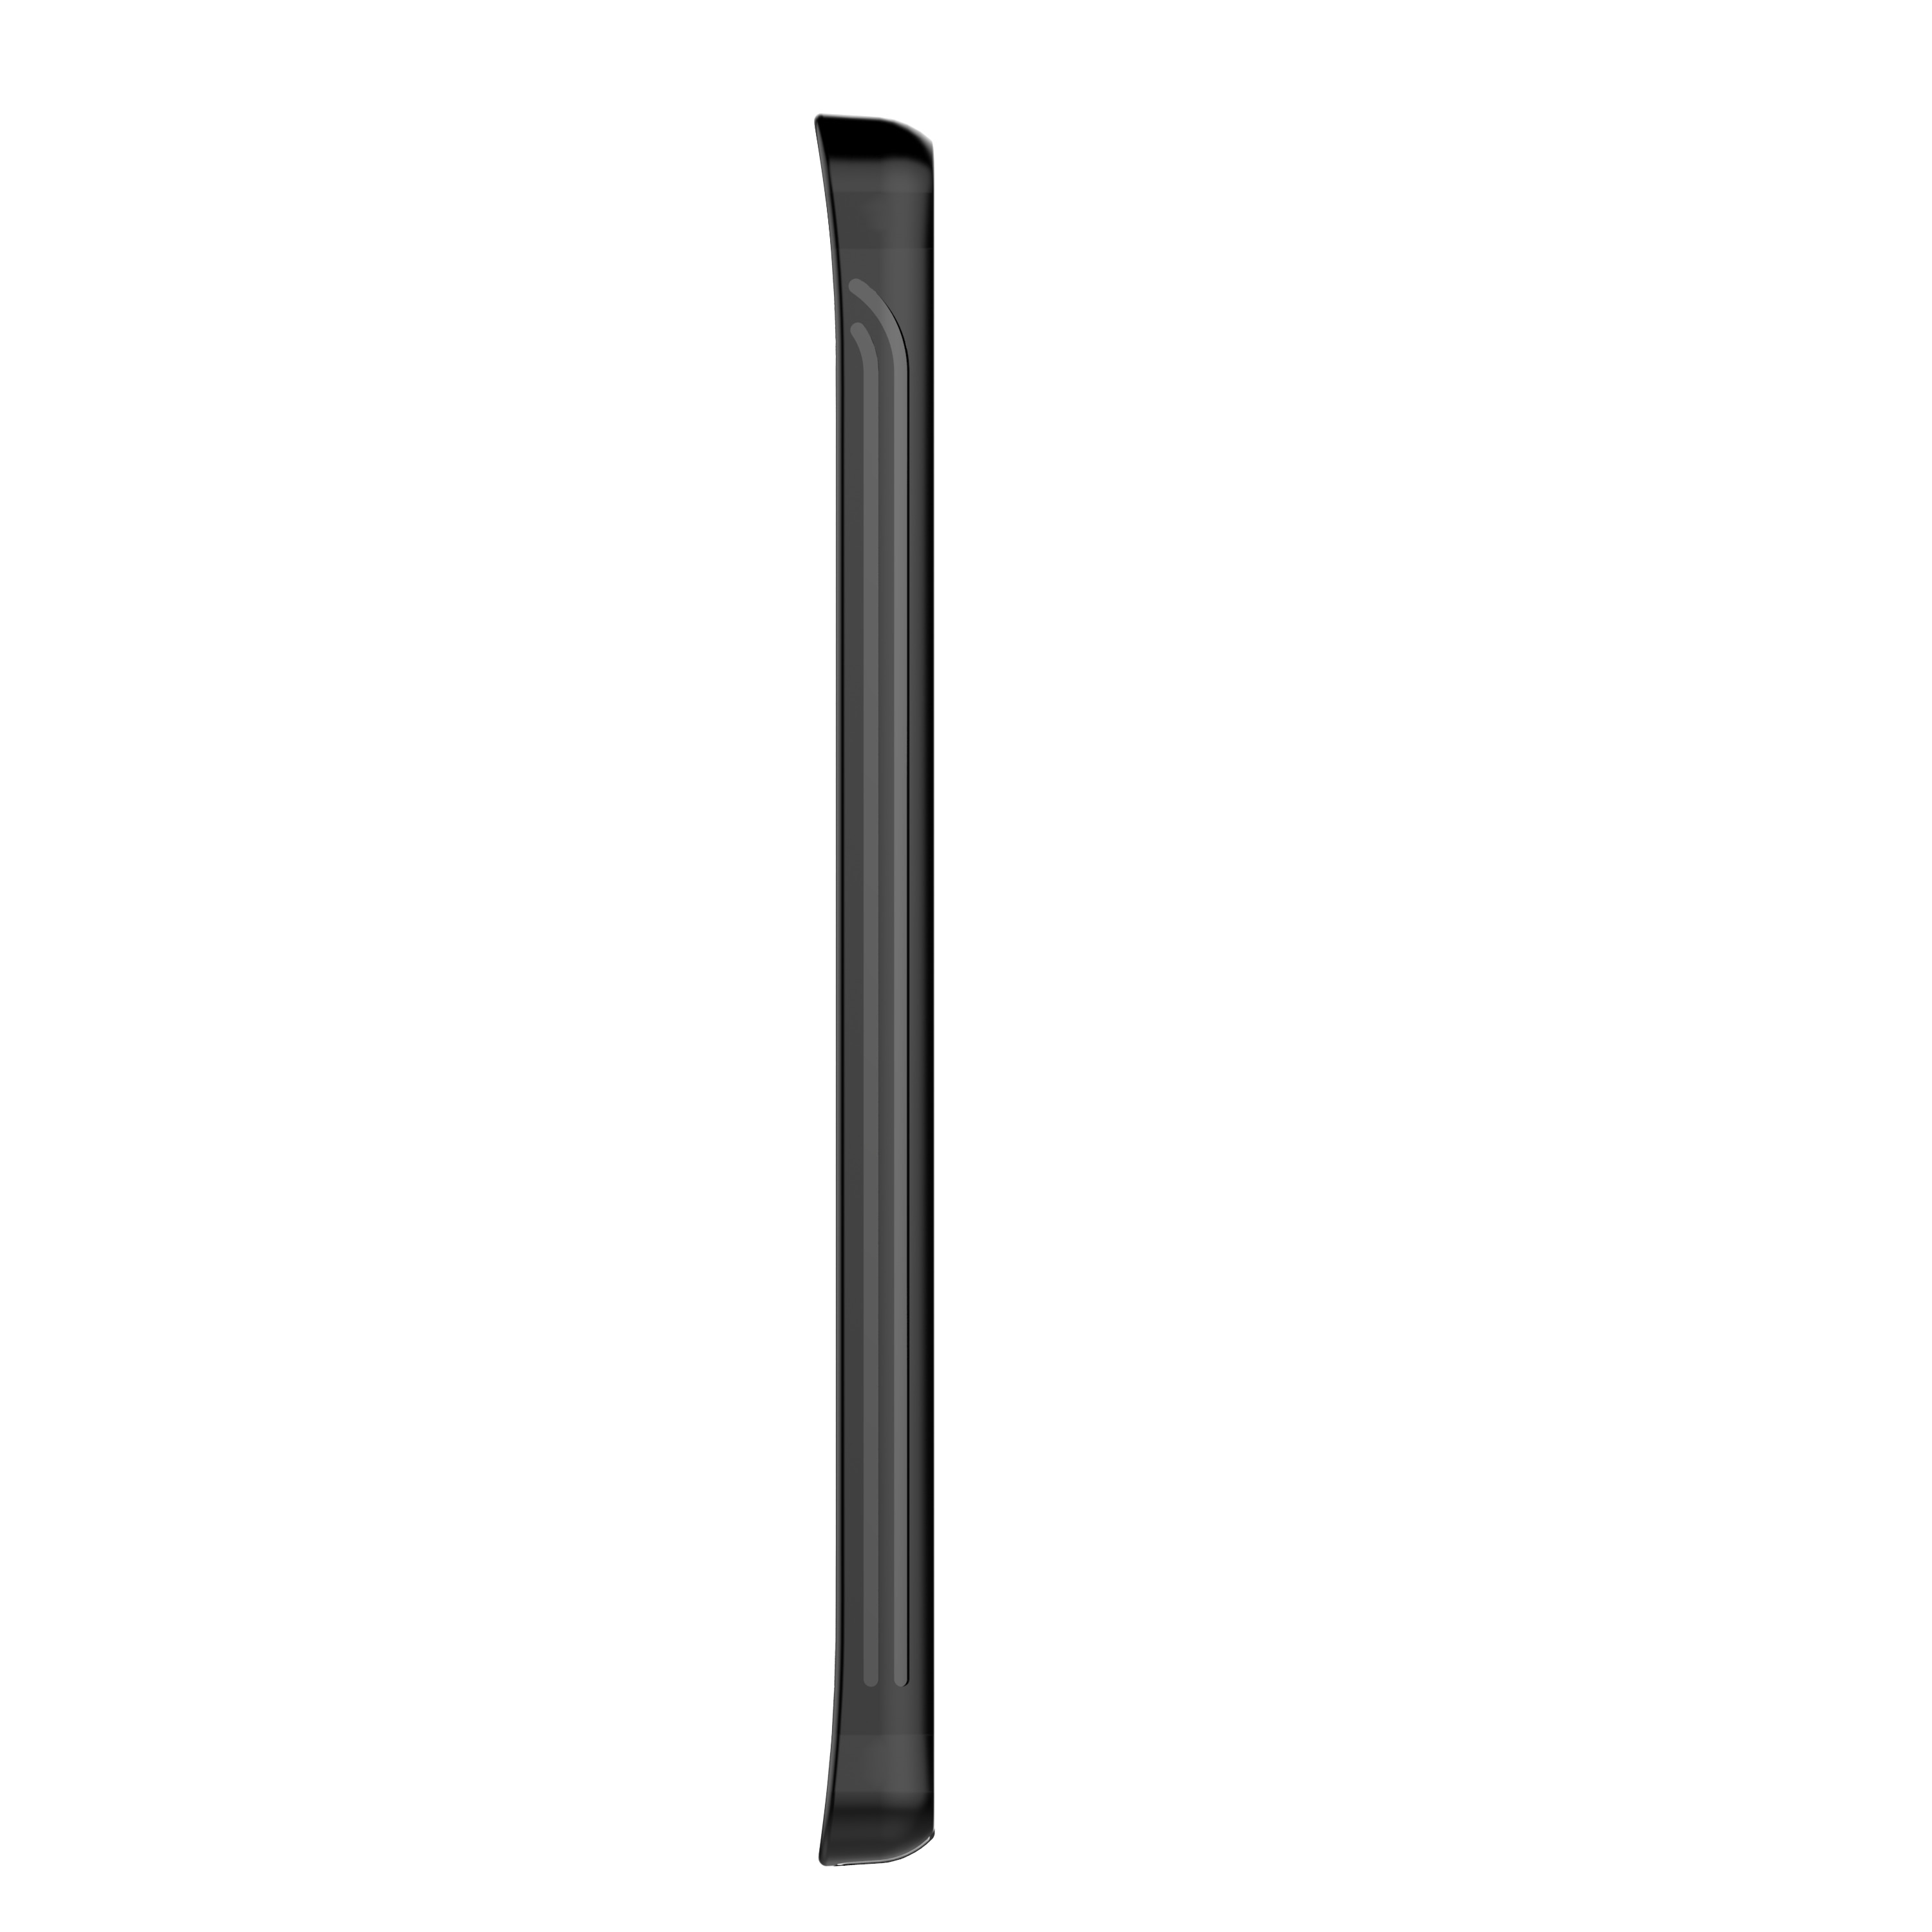 Samsung Galaxy Note 10 Plus Premium Full Protection Case Black